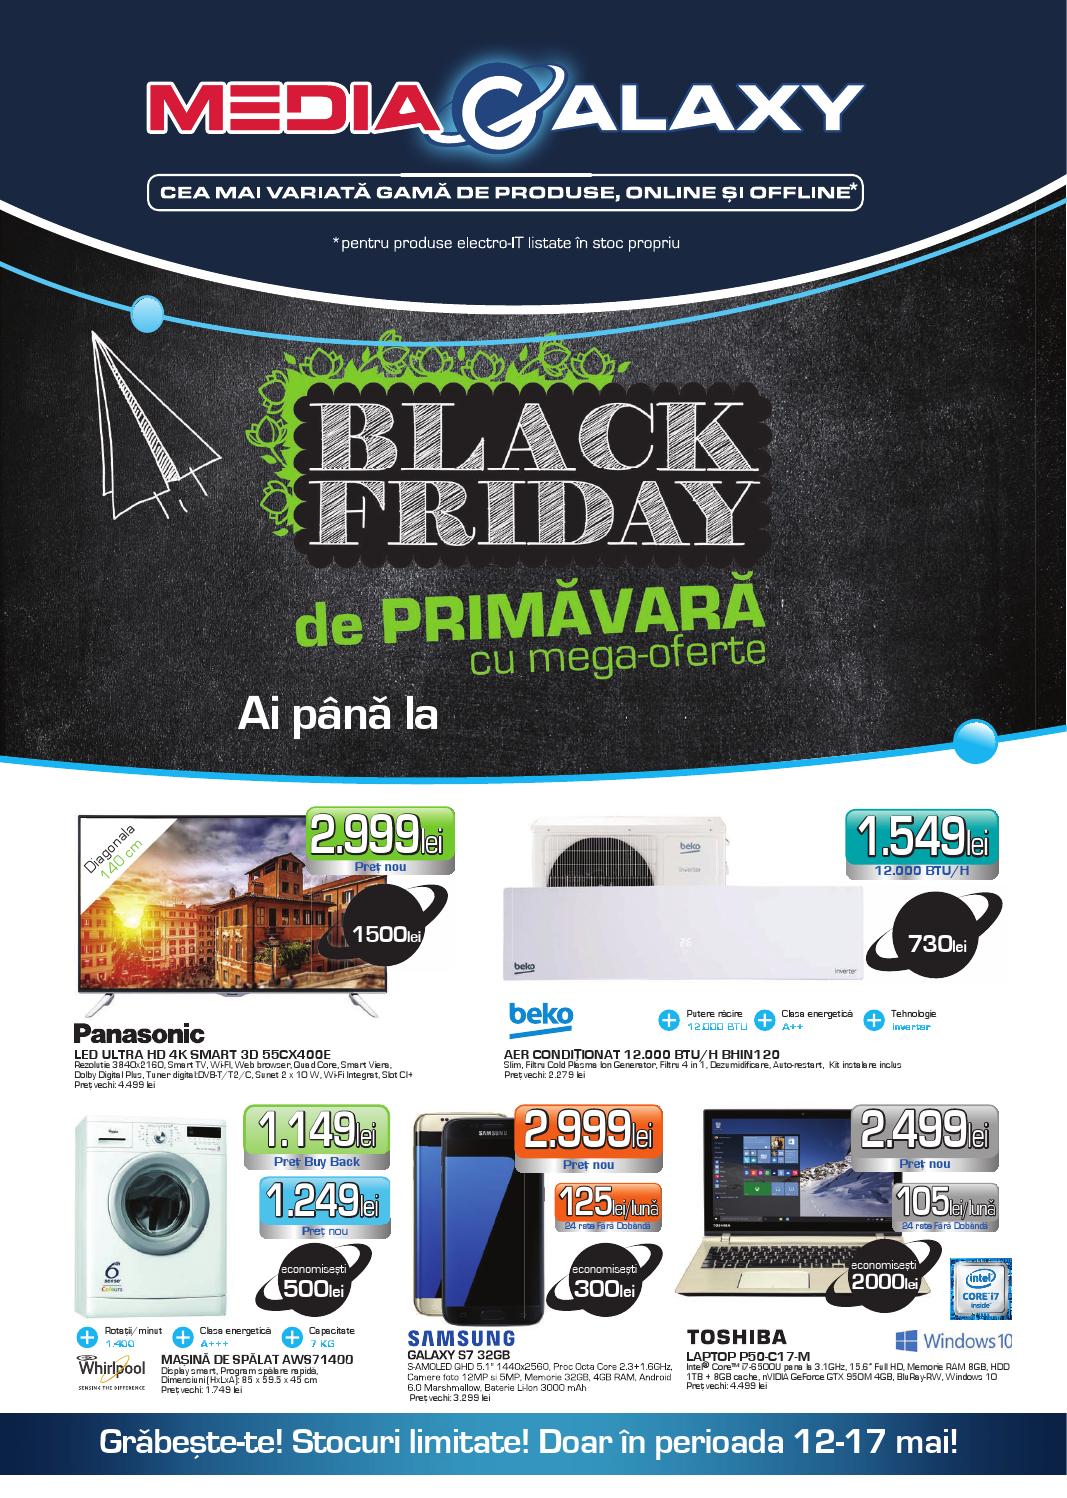 Shuraba Odorless Human Catalog Media Galaxy Black Friday de Primavara 2016